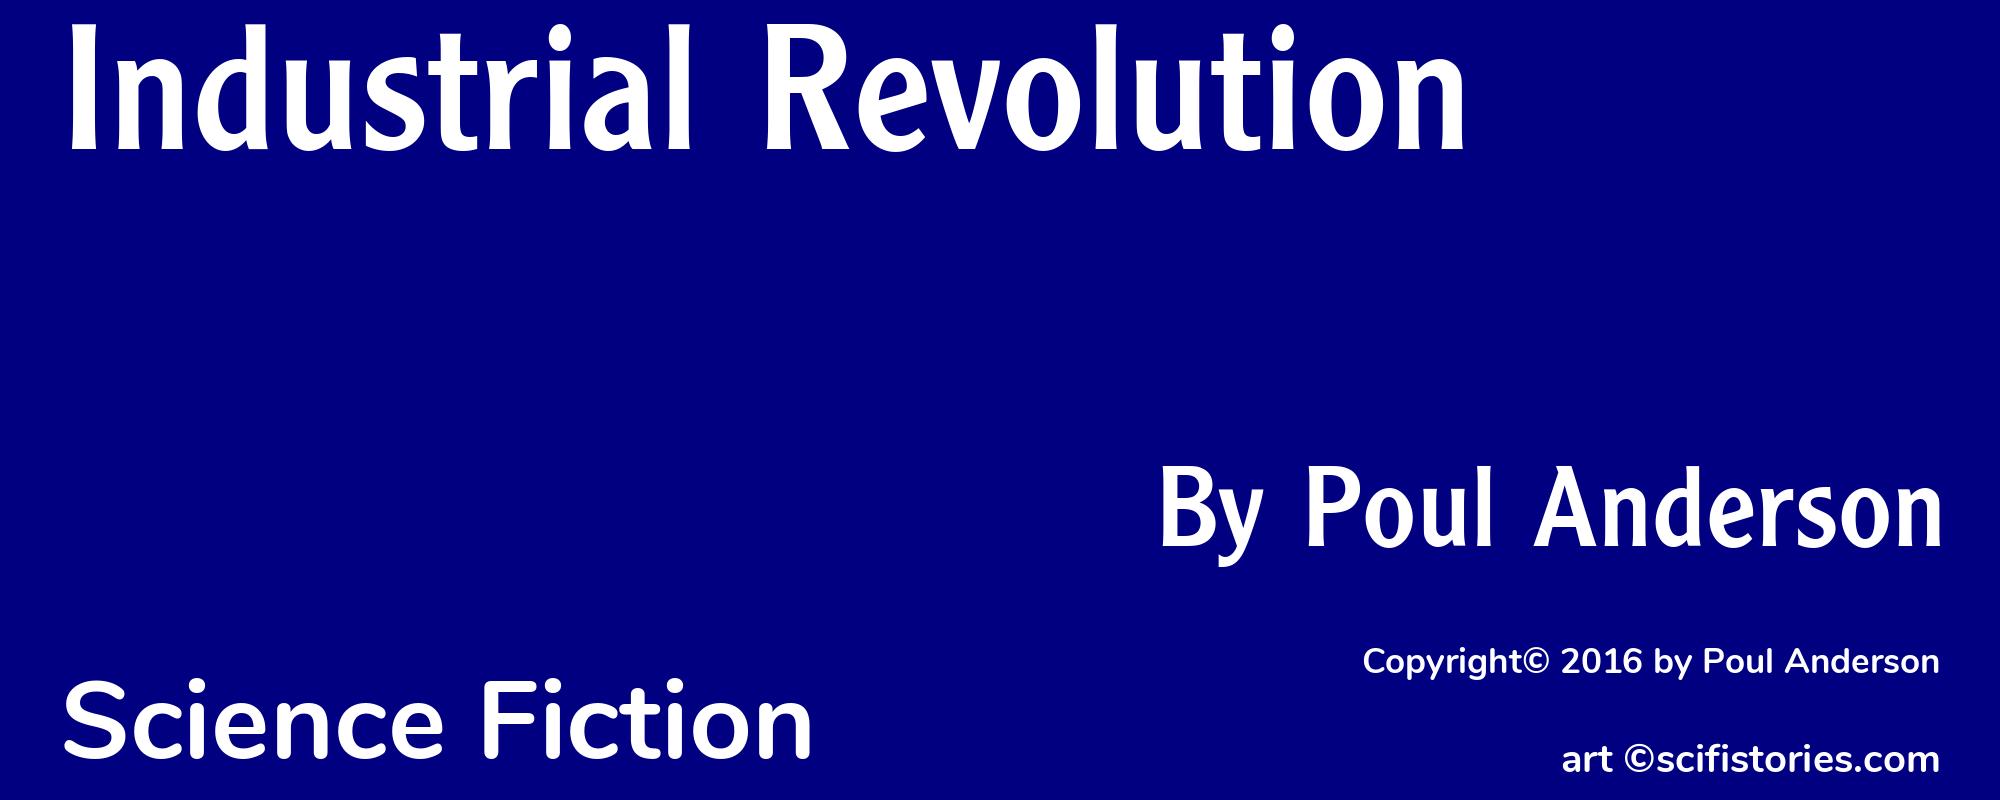 Industrial Revolution - Cover